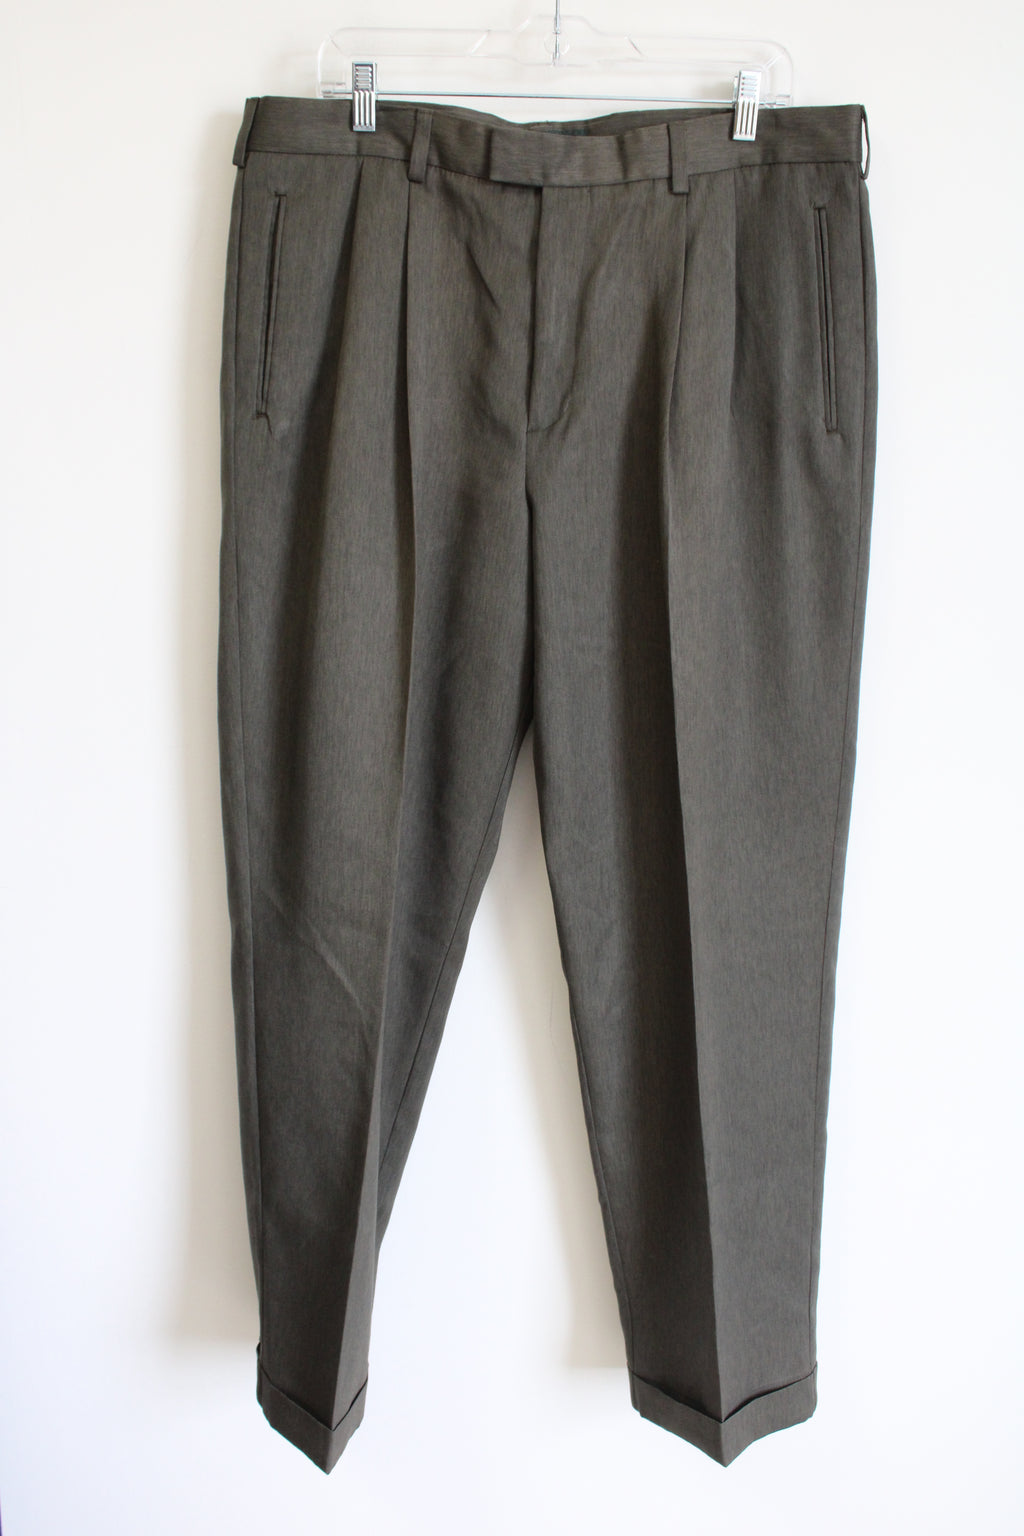 Dockers Premium Olive Green Trouser Pants | 38x32